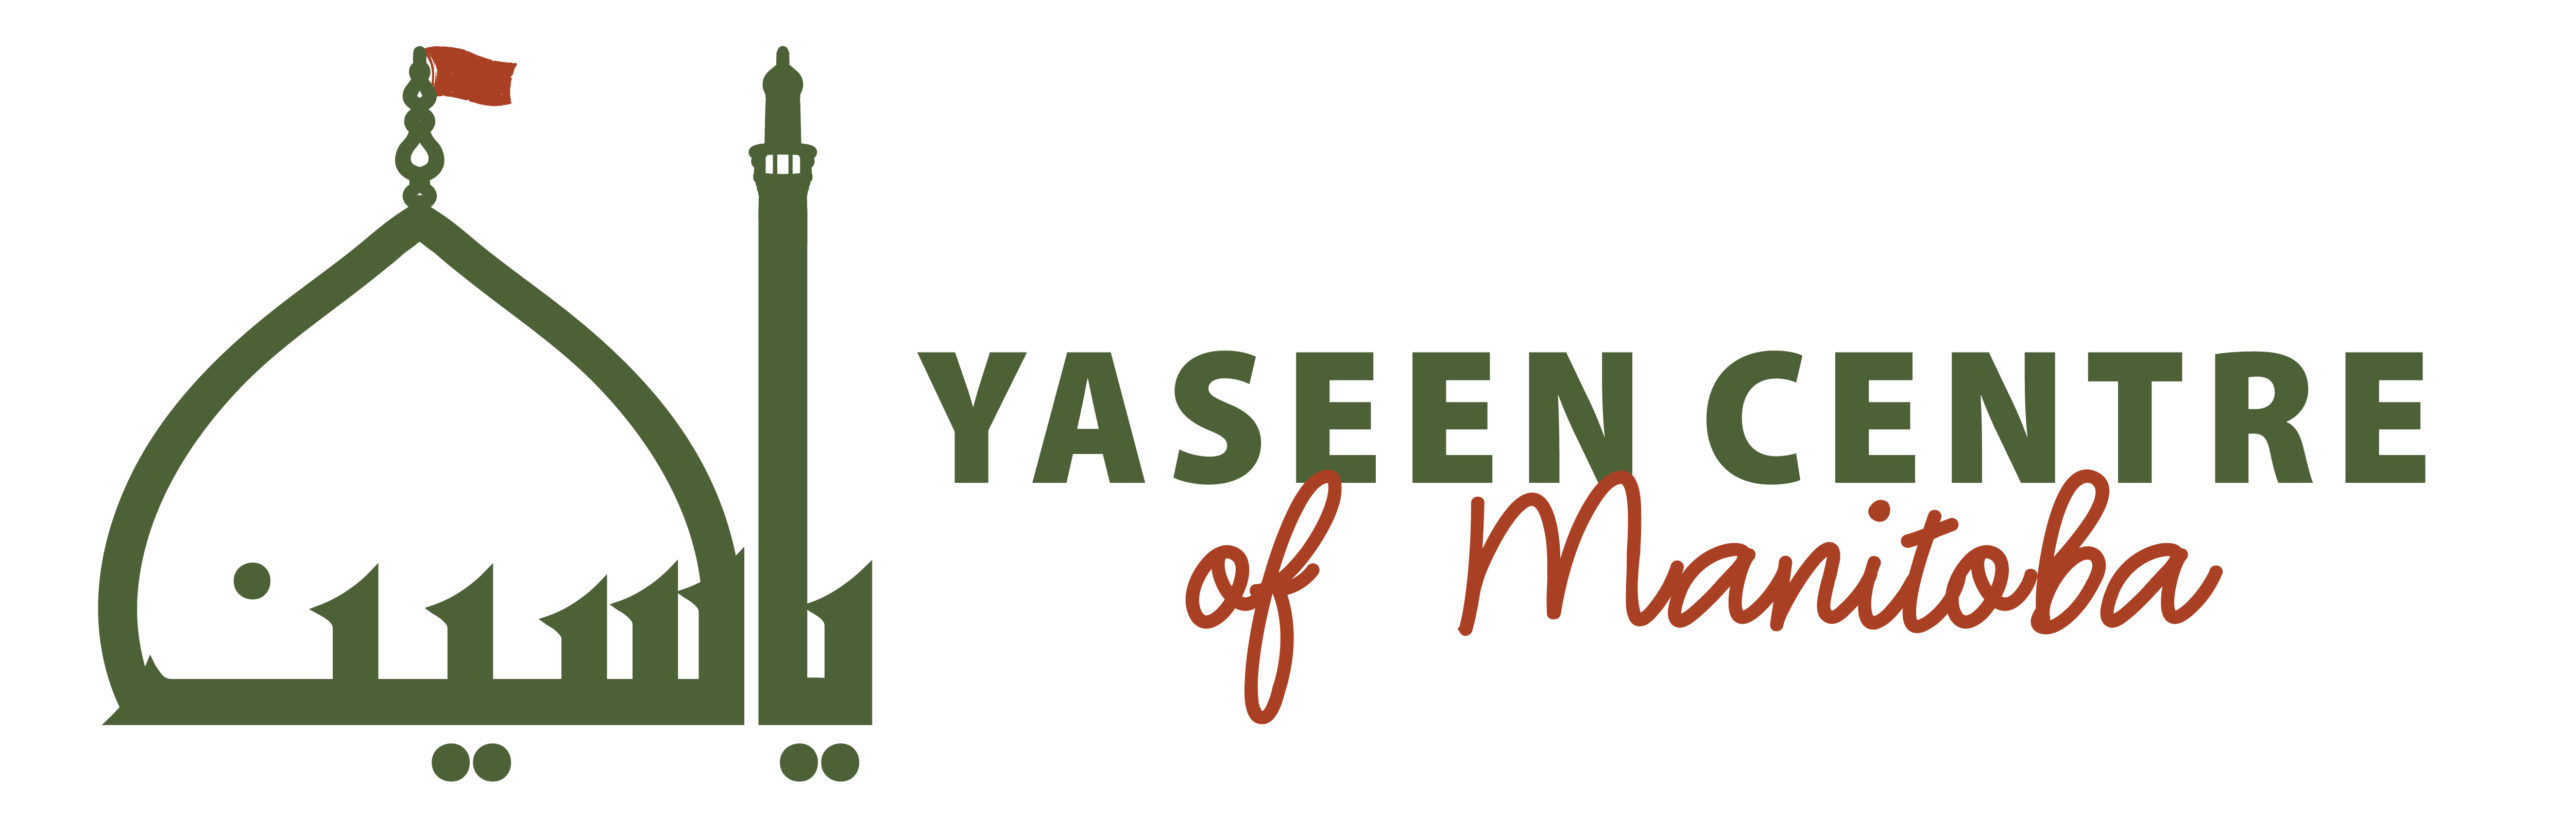 Yaseen Centre of Manitoba